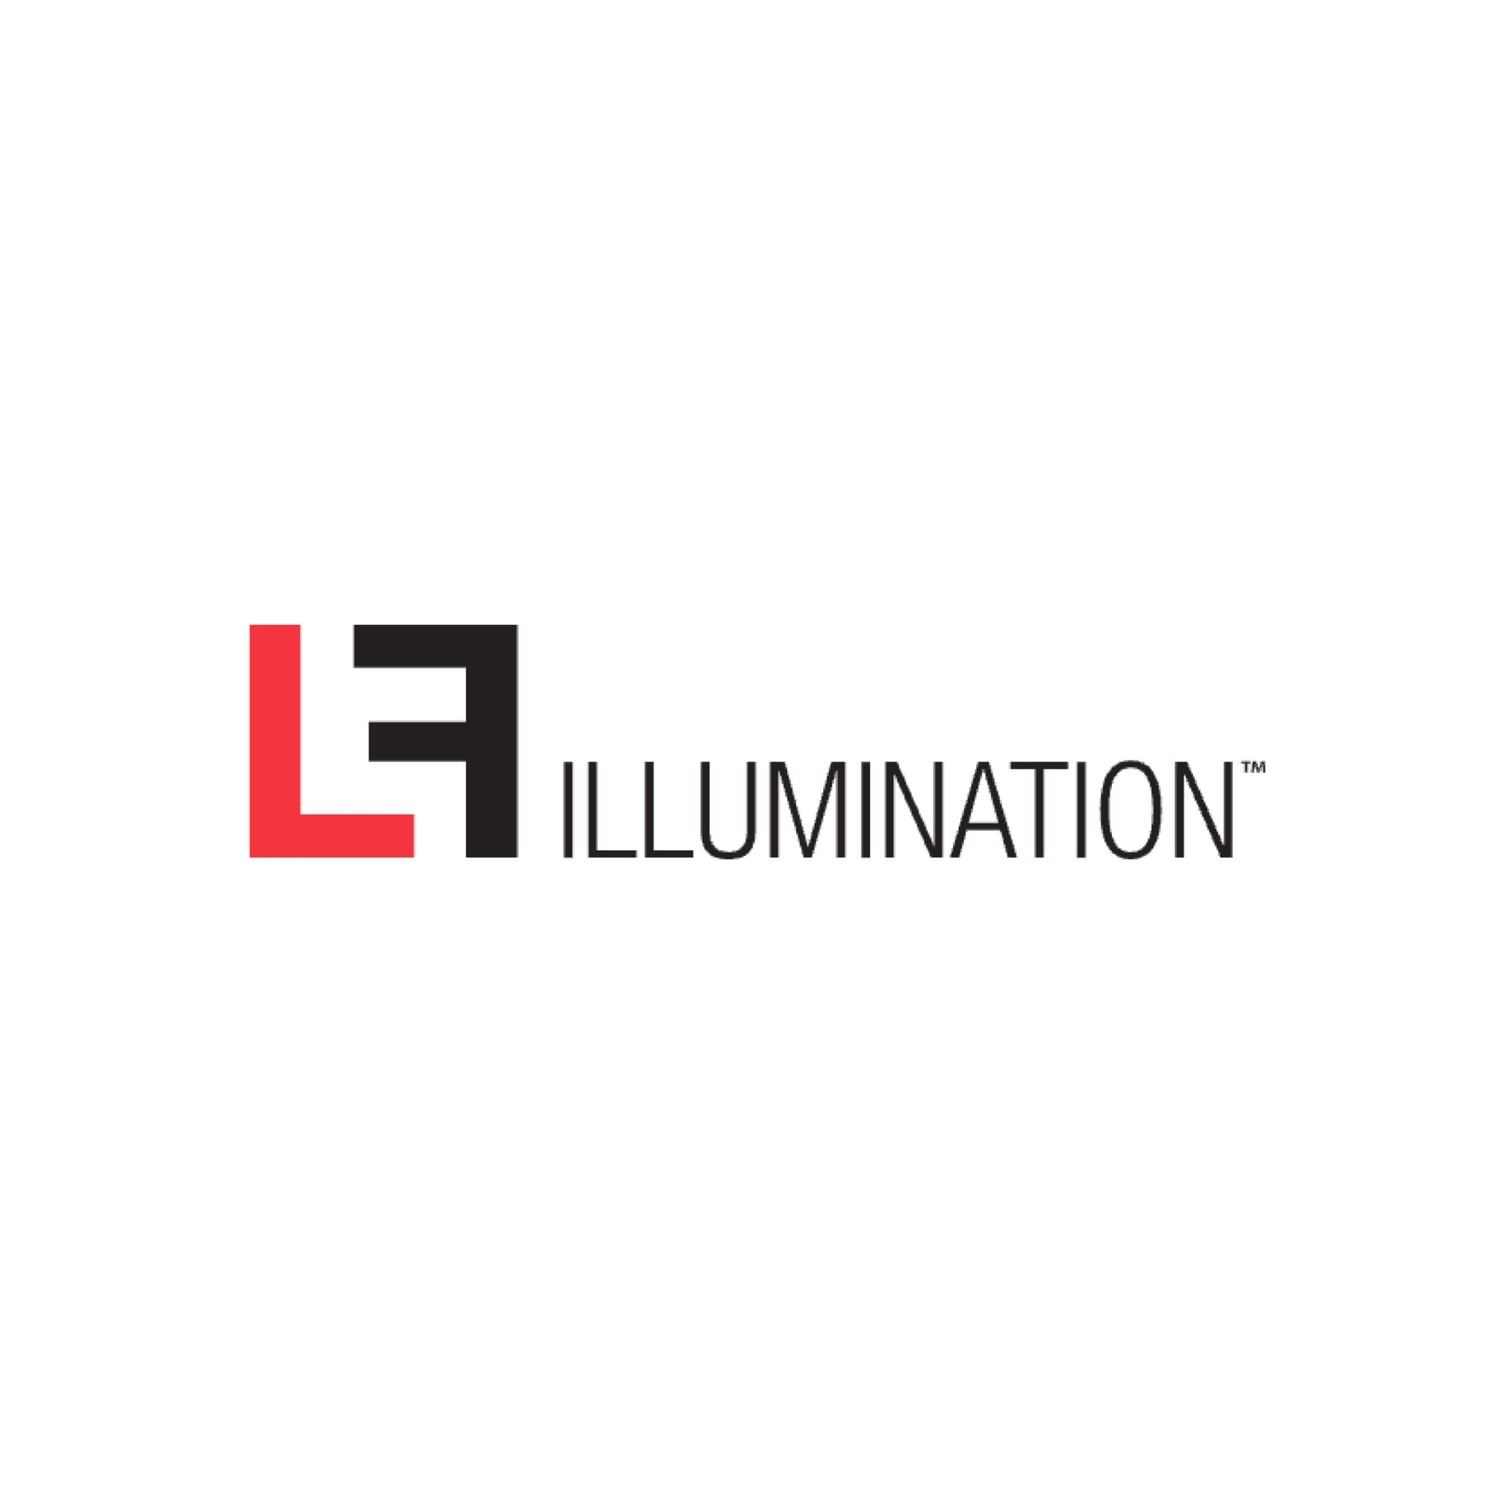 LF ILLUMINATION LLC